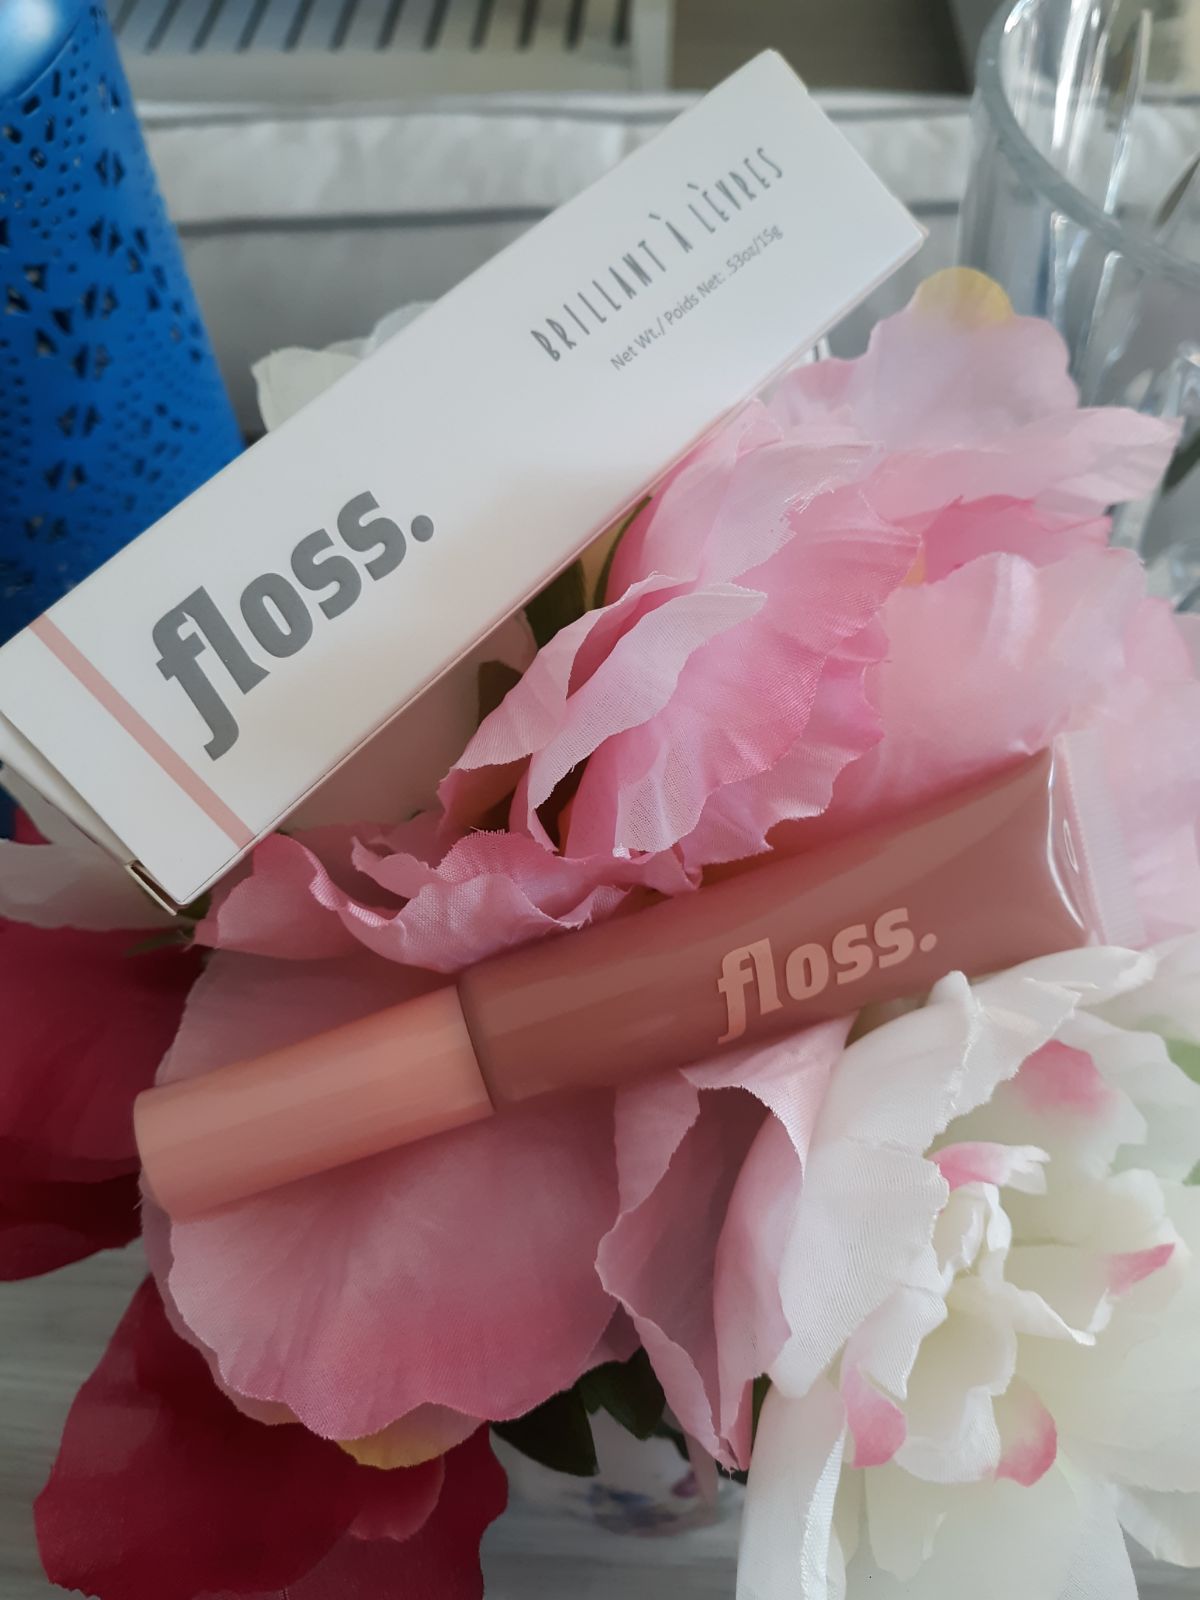 Floss Lip Gloss In "YUL"